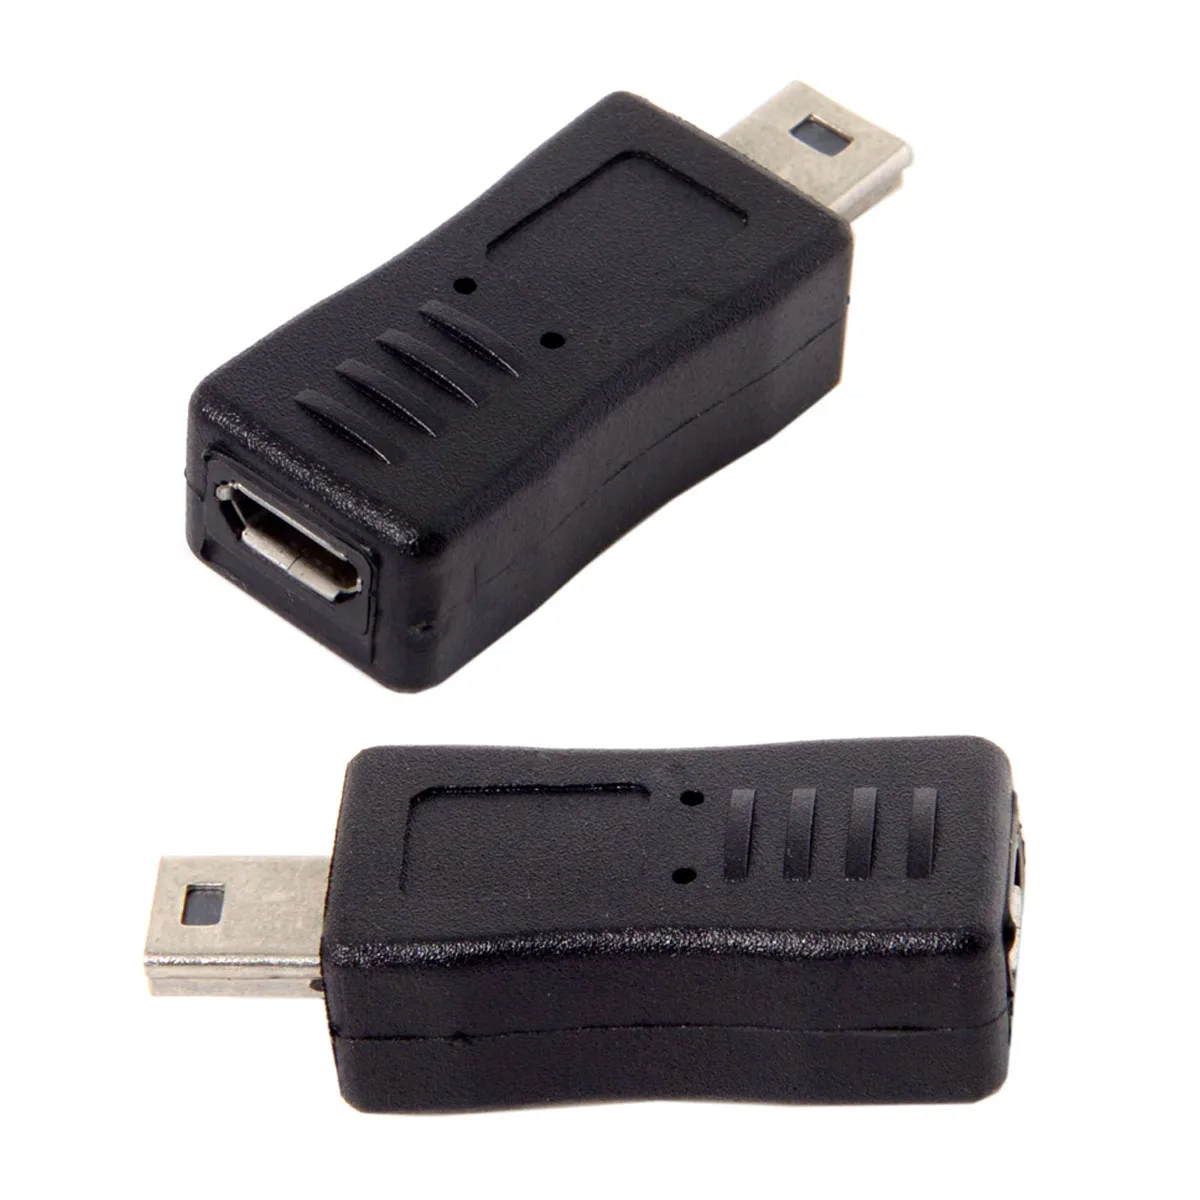 

Jimier CableCC два адаптера Micro USB 5Pin штекер-Мини Гнездо USB адаптер для зарядки данных для планшета и сотового телефона